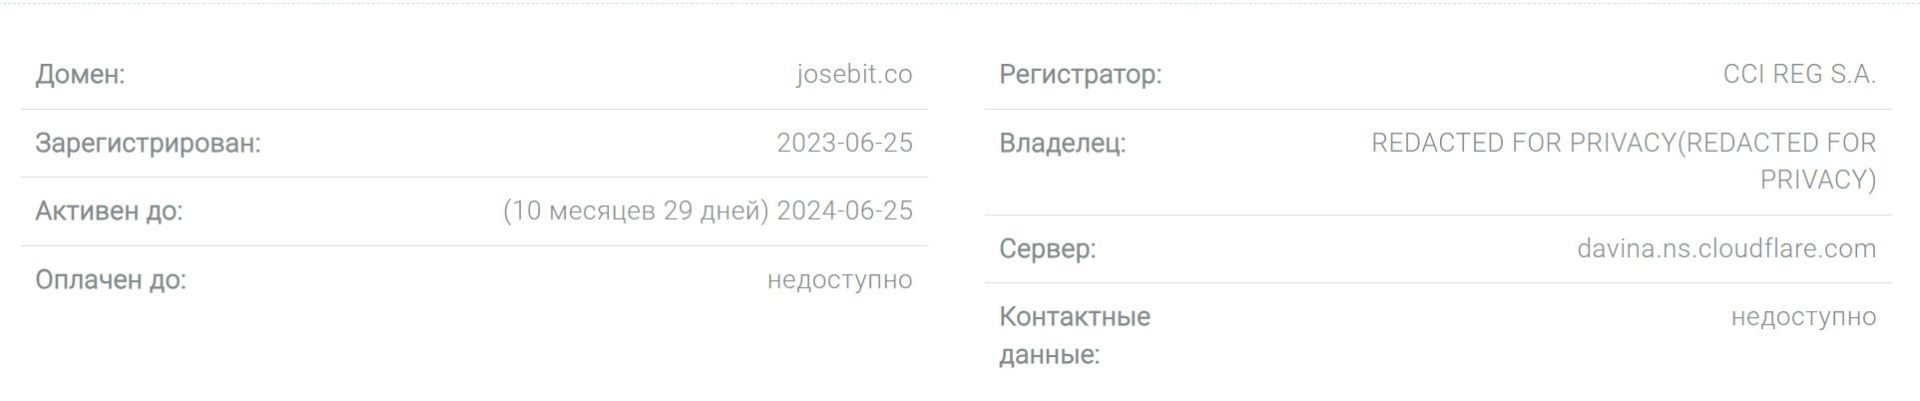 Проверка компании Josebit